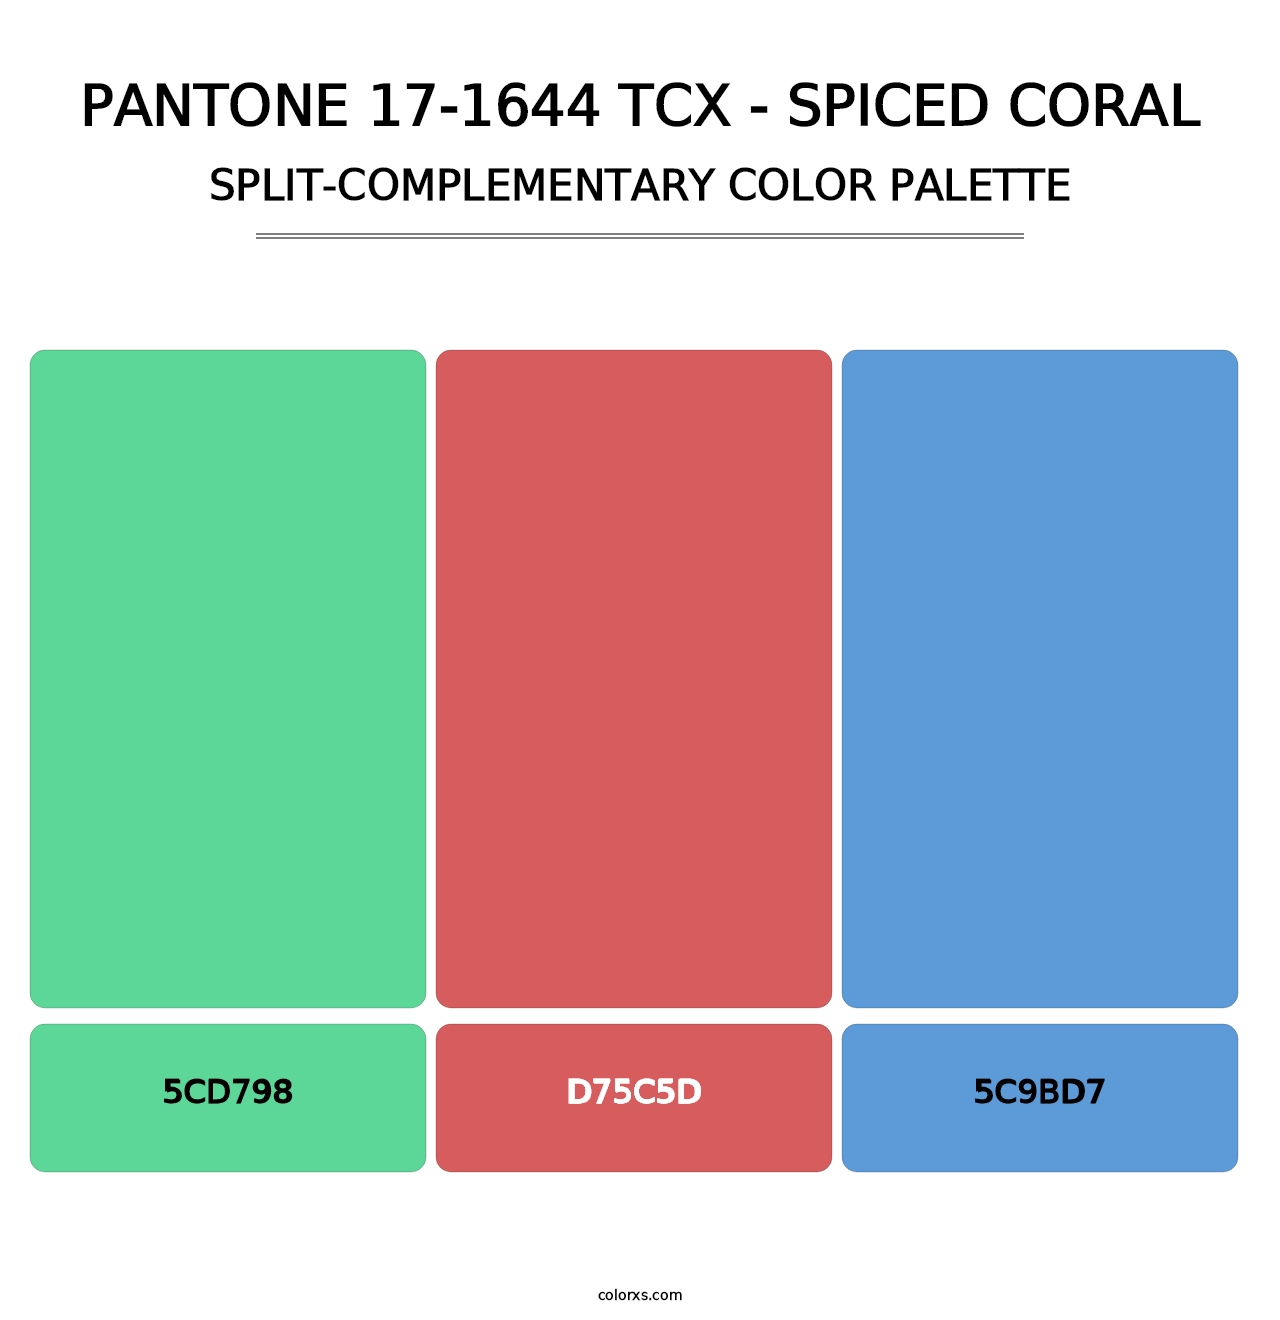 PANTONE 17-1644 TCX - Spiced Coral - Split-Complementary Color Palette